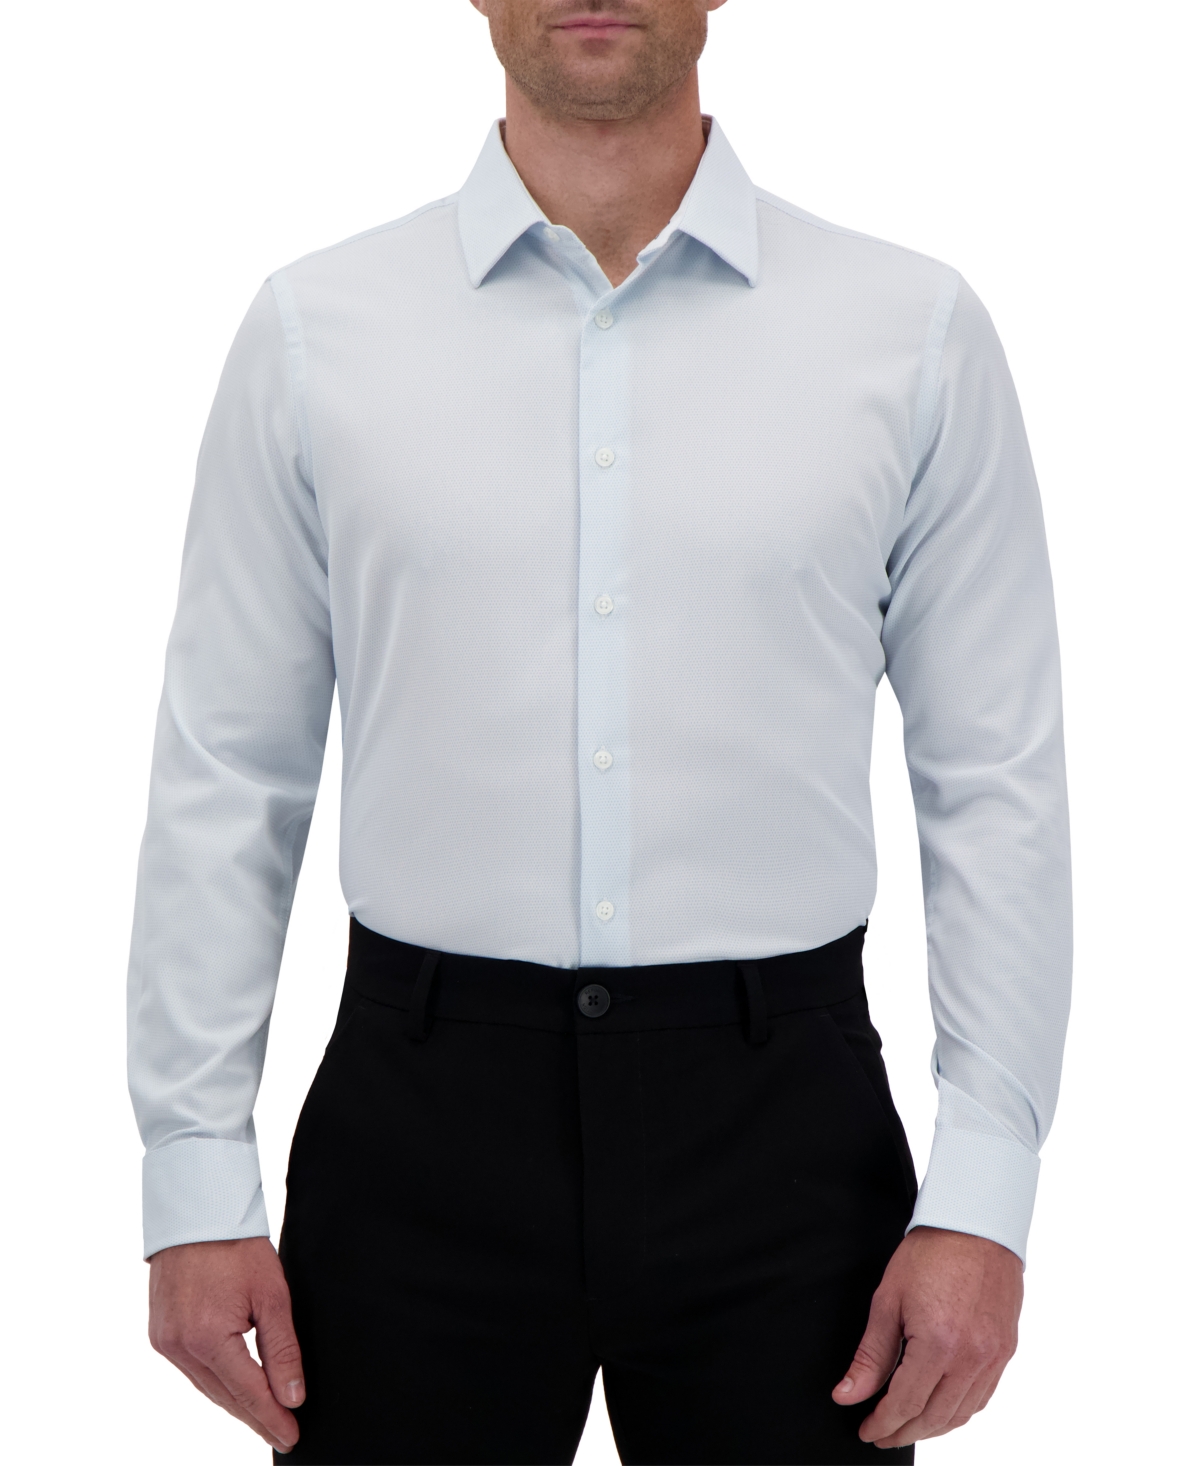 Men's Slim-Fit Motif-Print Dress Shirt - Light Blue